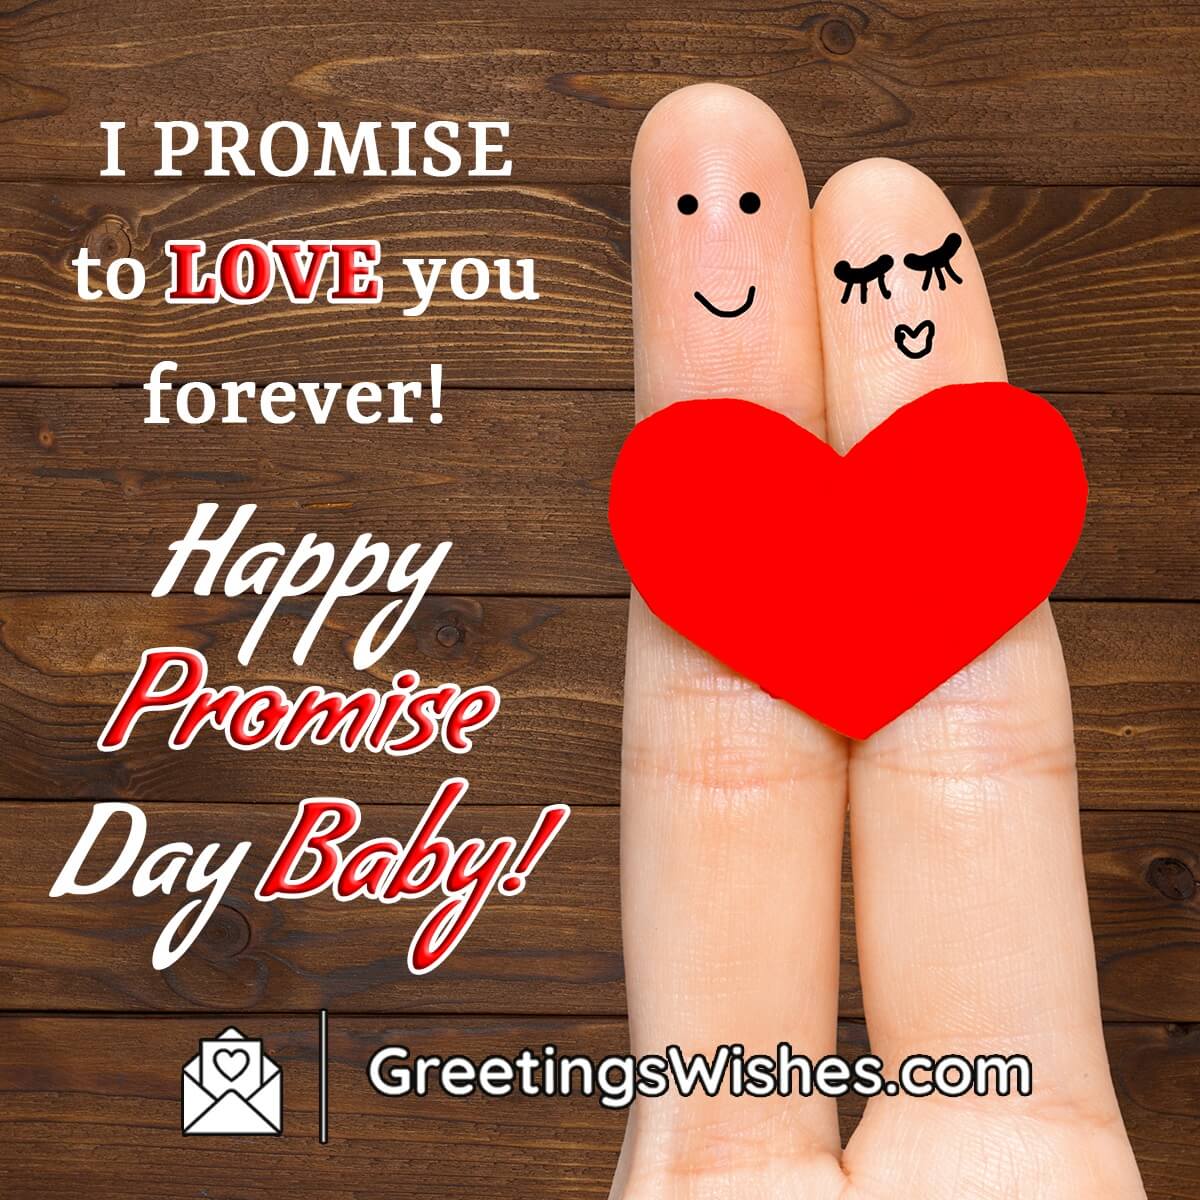 Happy Promise Day Baby